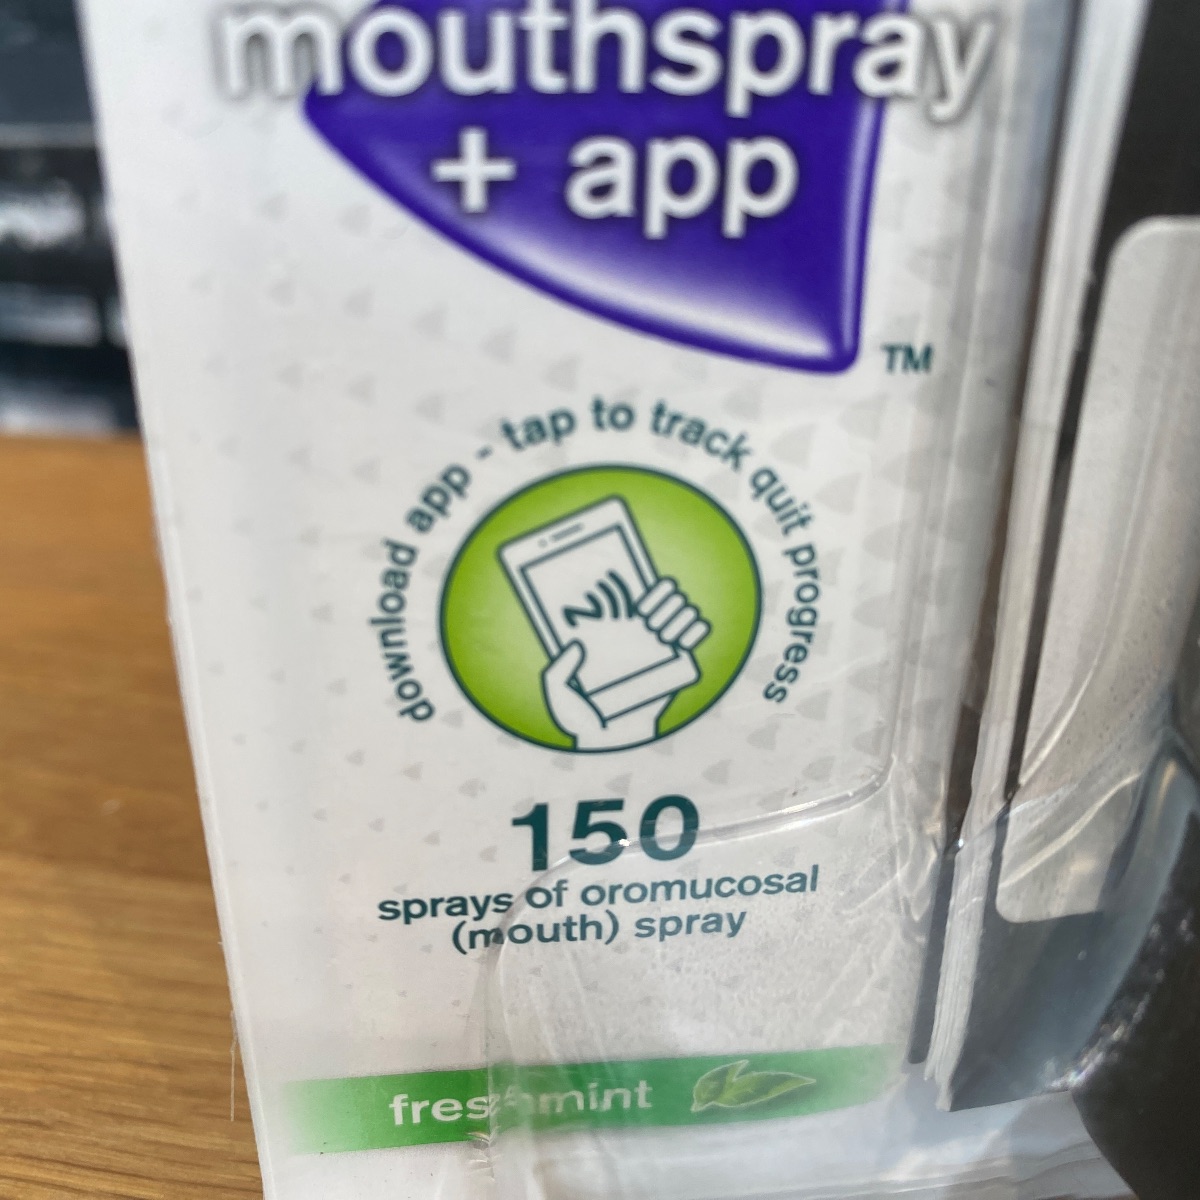 2 x Nicorette QuickMist Freshmint SmartTrack 2 x 150 Spray Mouthspray + App 1mg QUICKMIST 3574661557168 (Brand New)